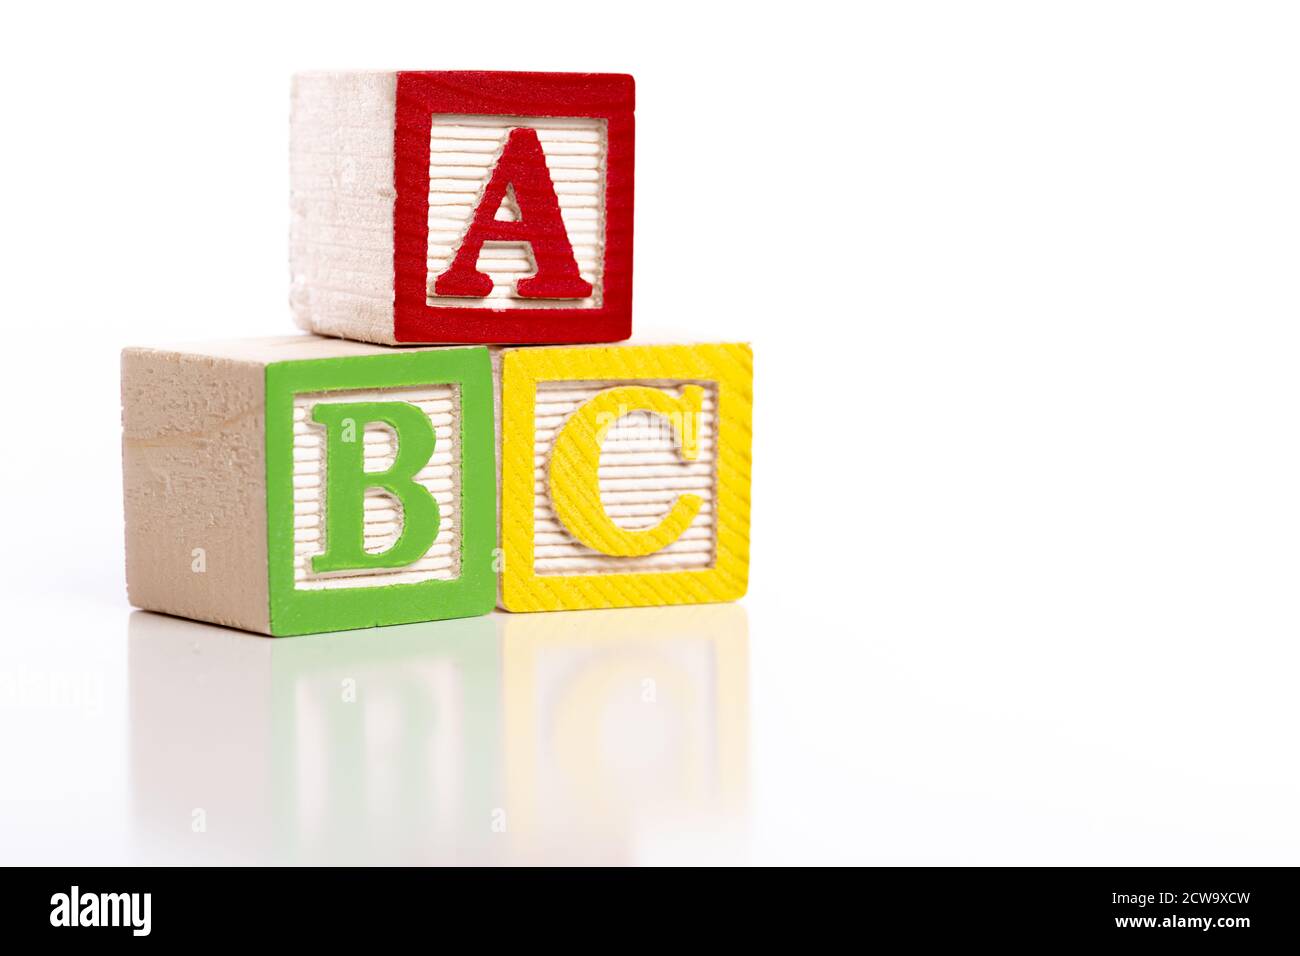 Wooden ABC blocks on white background Stock Photo